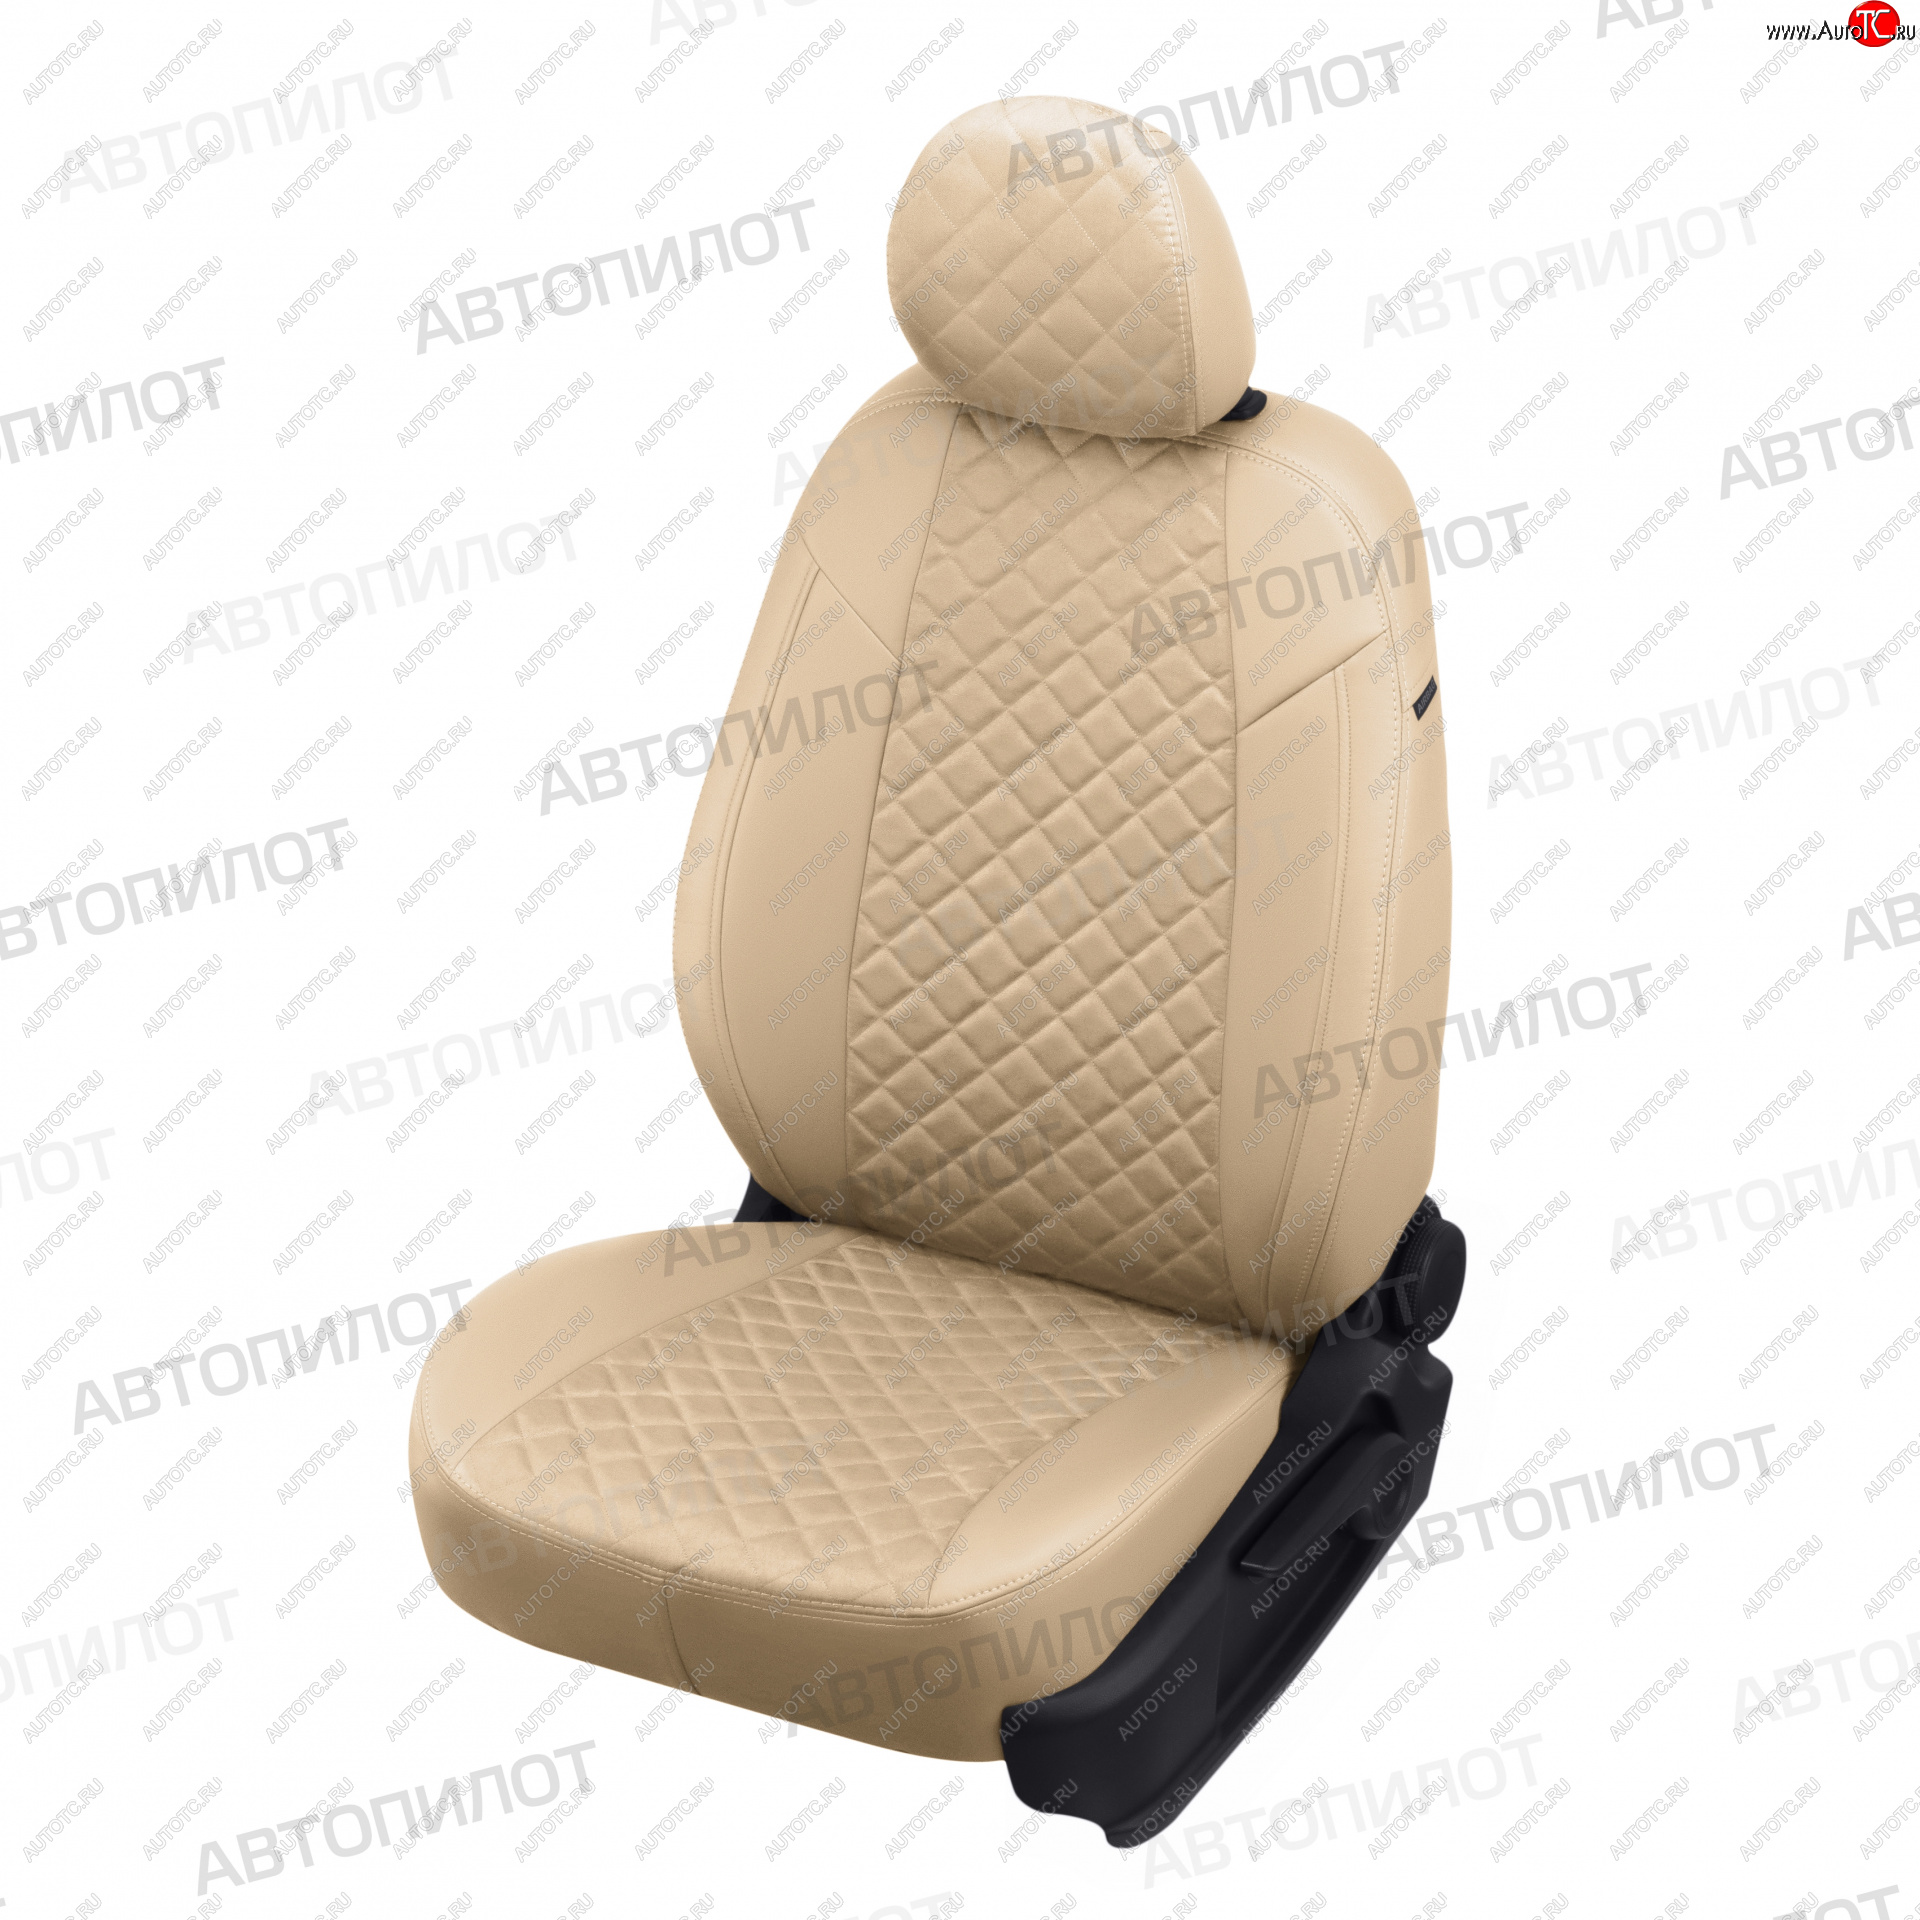 8 699 р. Чехлы сидений (экокожа/алькантара, 3 места) Автопилот Ромб  Hyundai HD-72 - HD78 (бежевый)